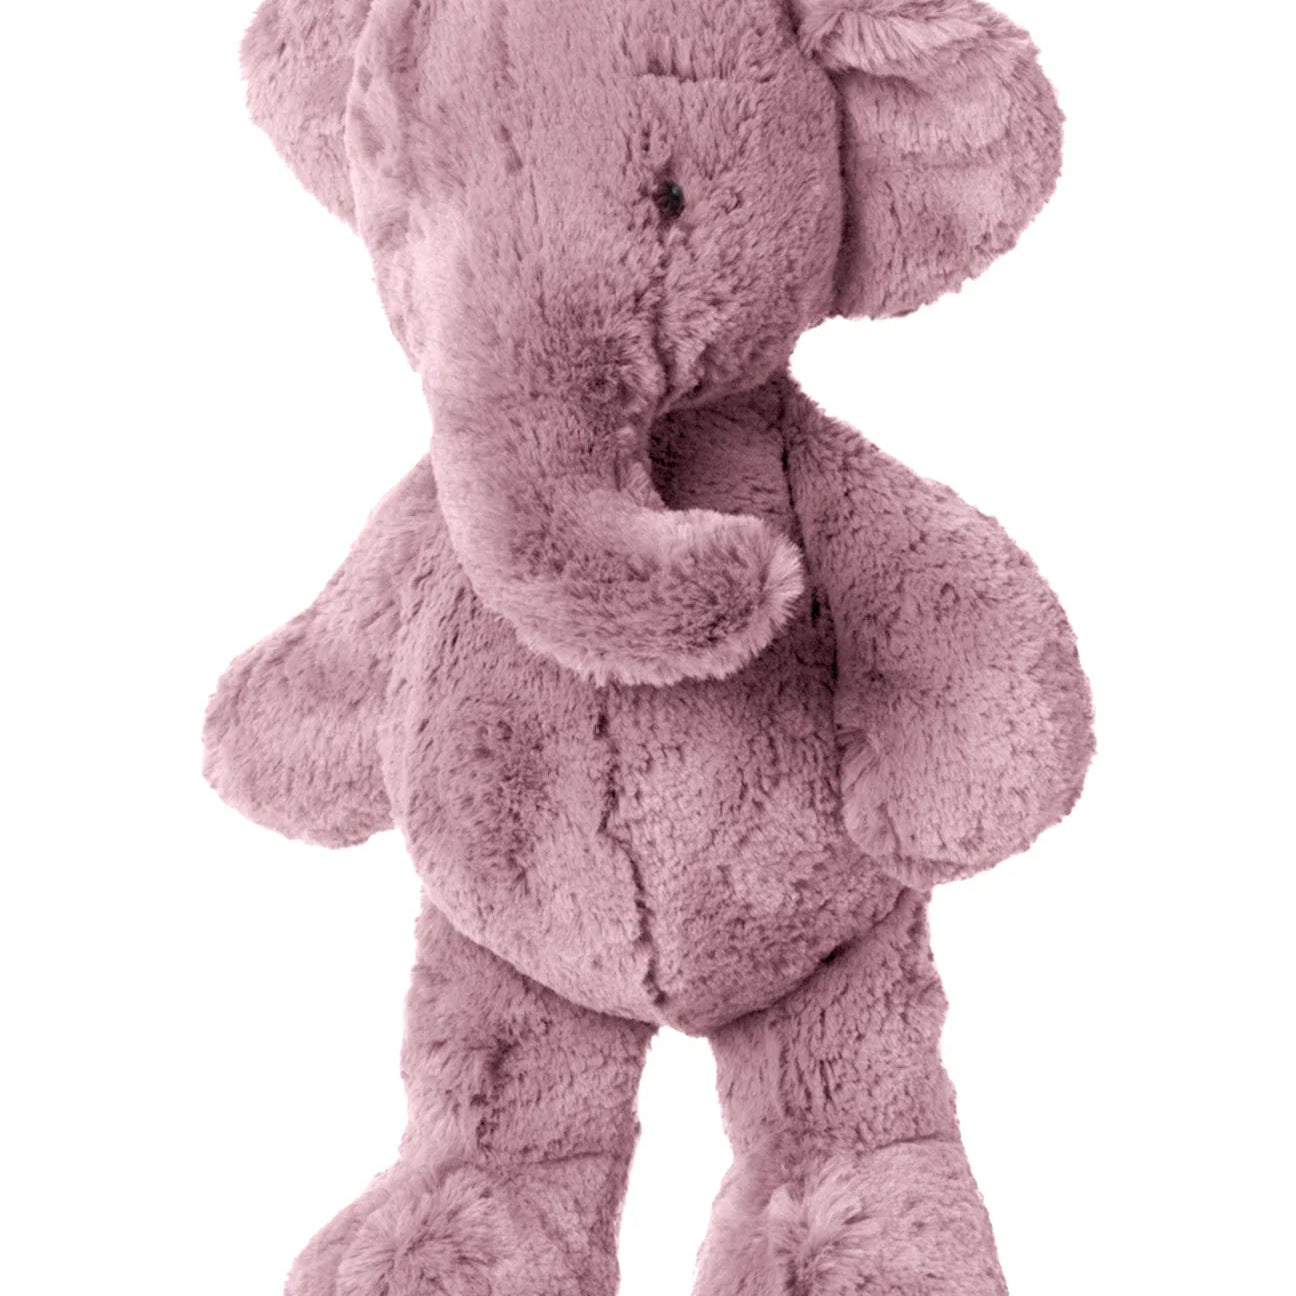 WWF ECO 29cm Ebu The Elephant Pink Default Title